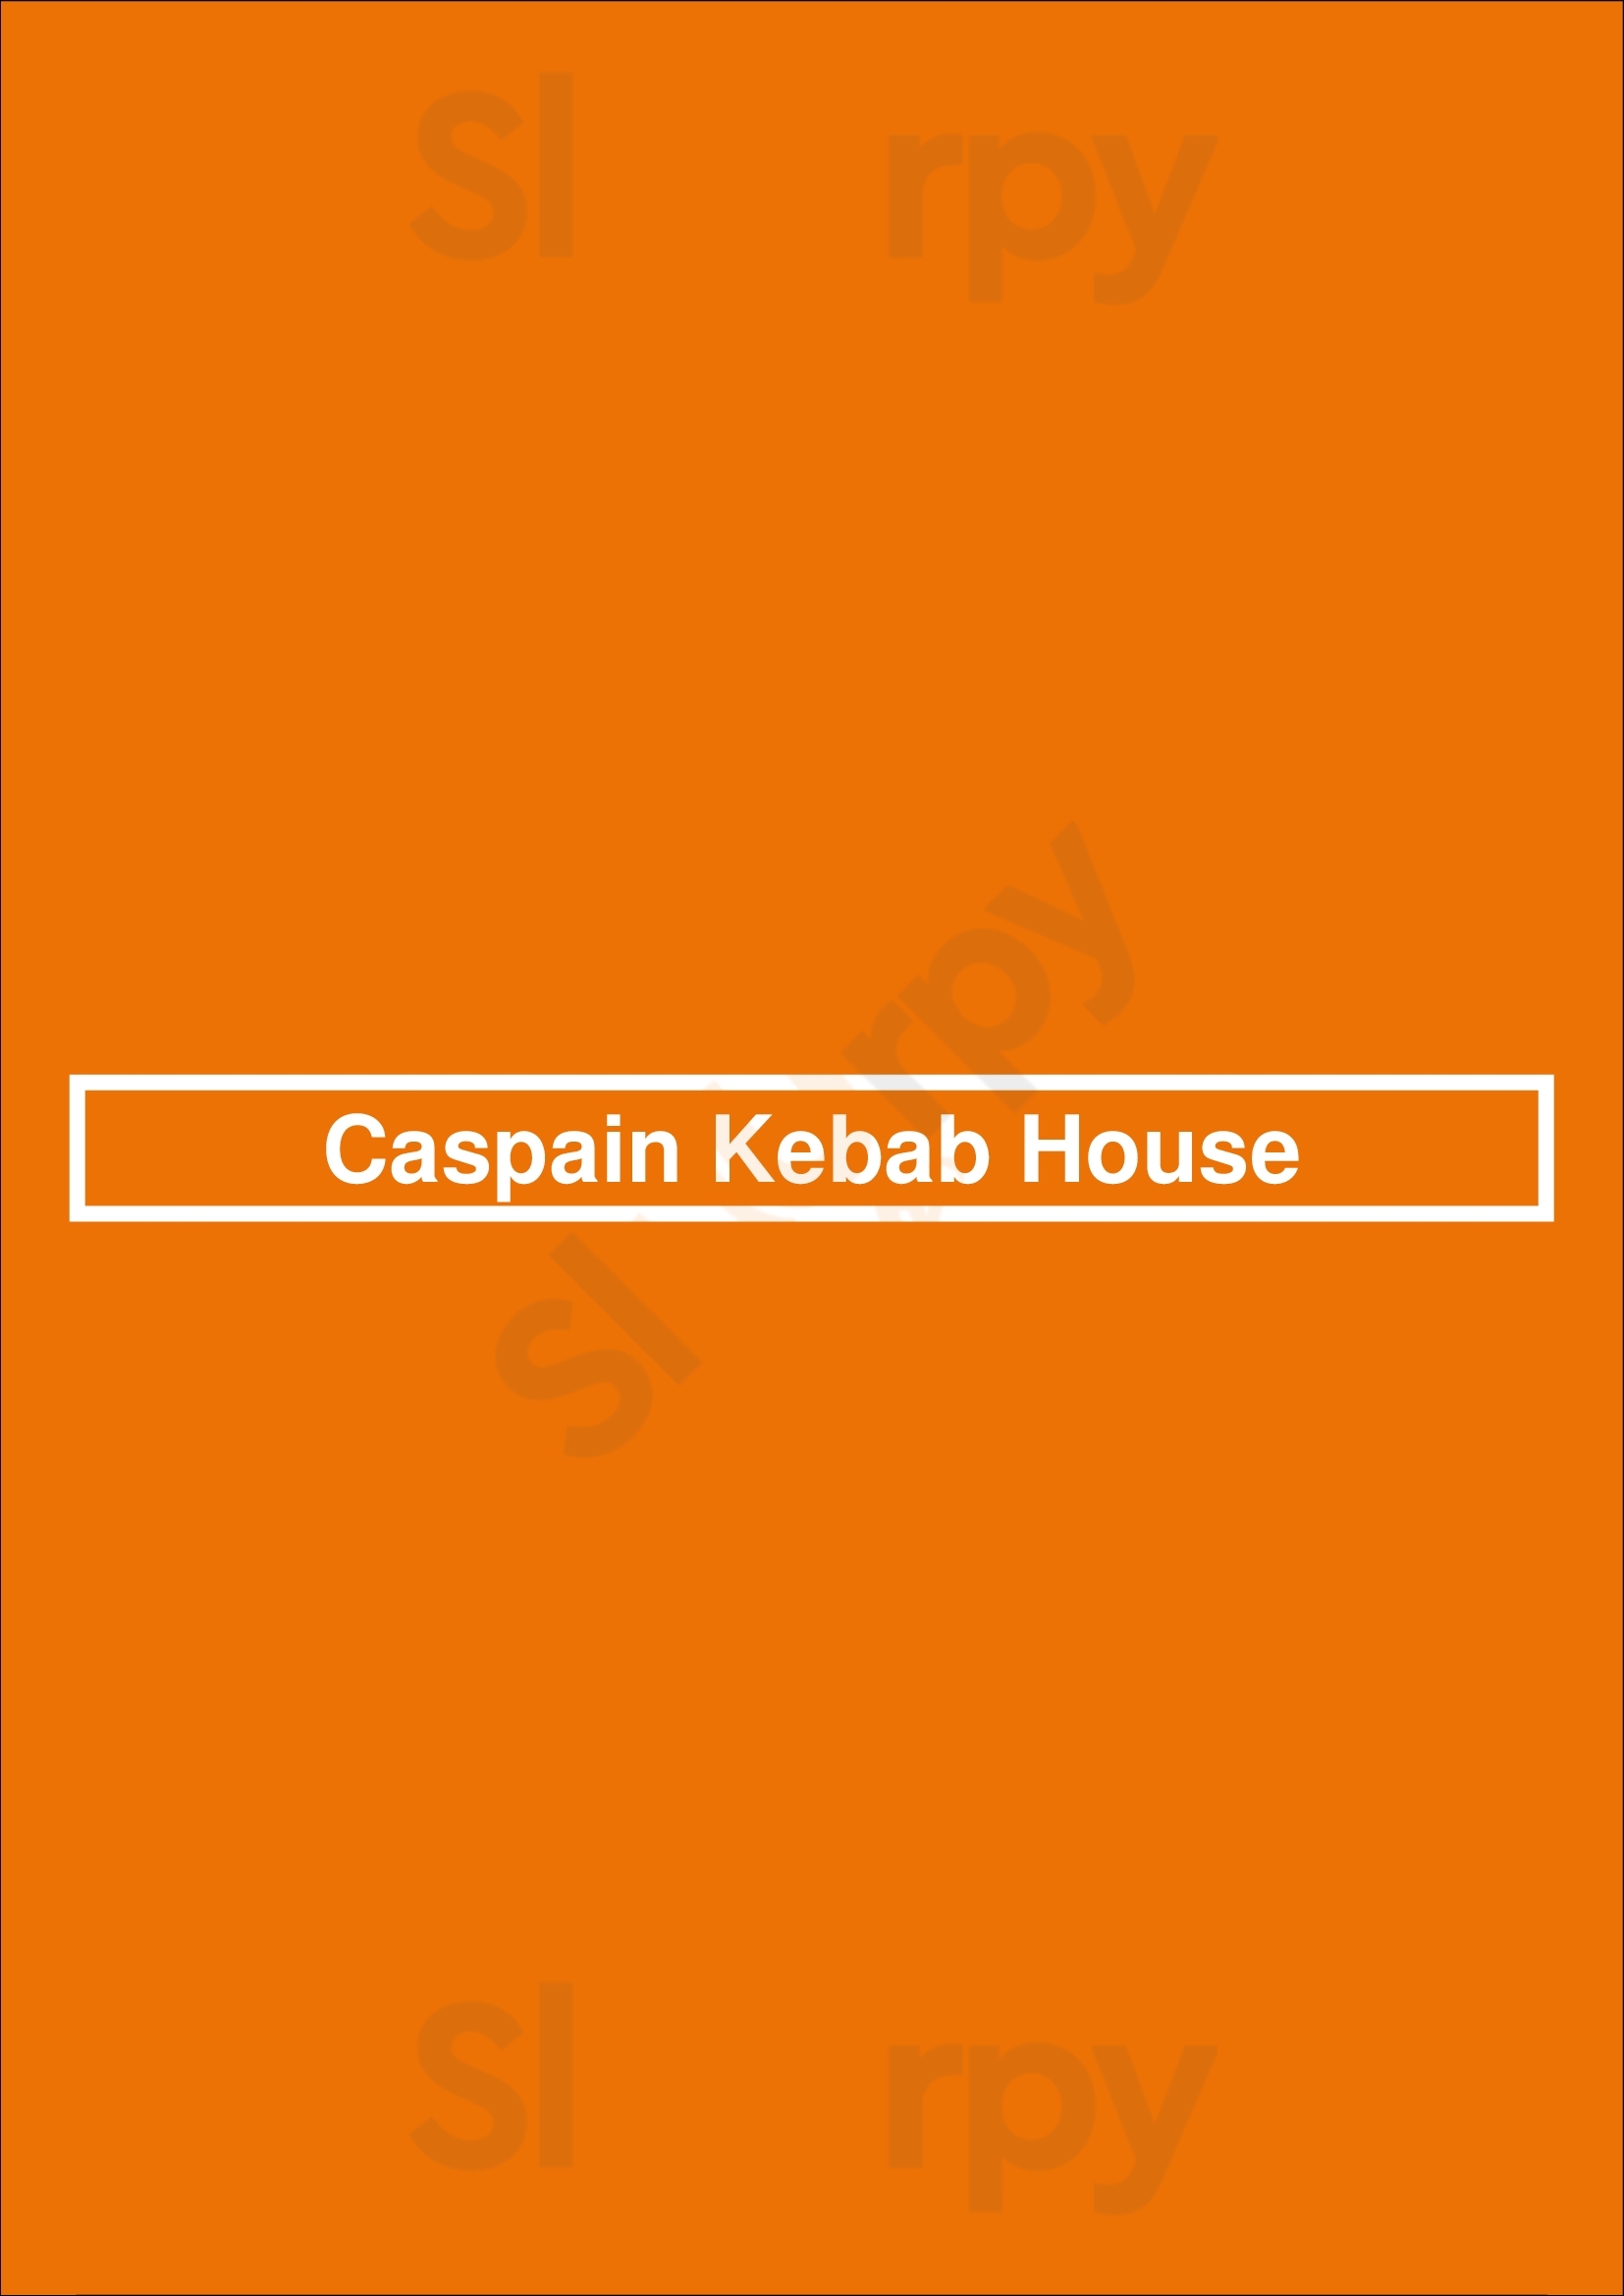 Caspain Kebab House Northwich Menu - 1